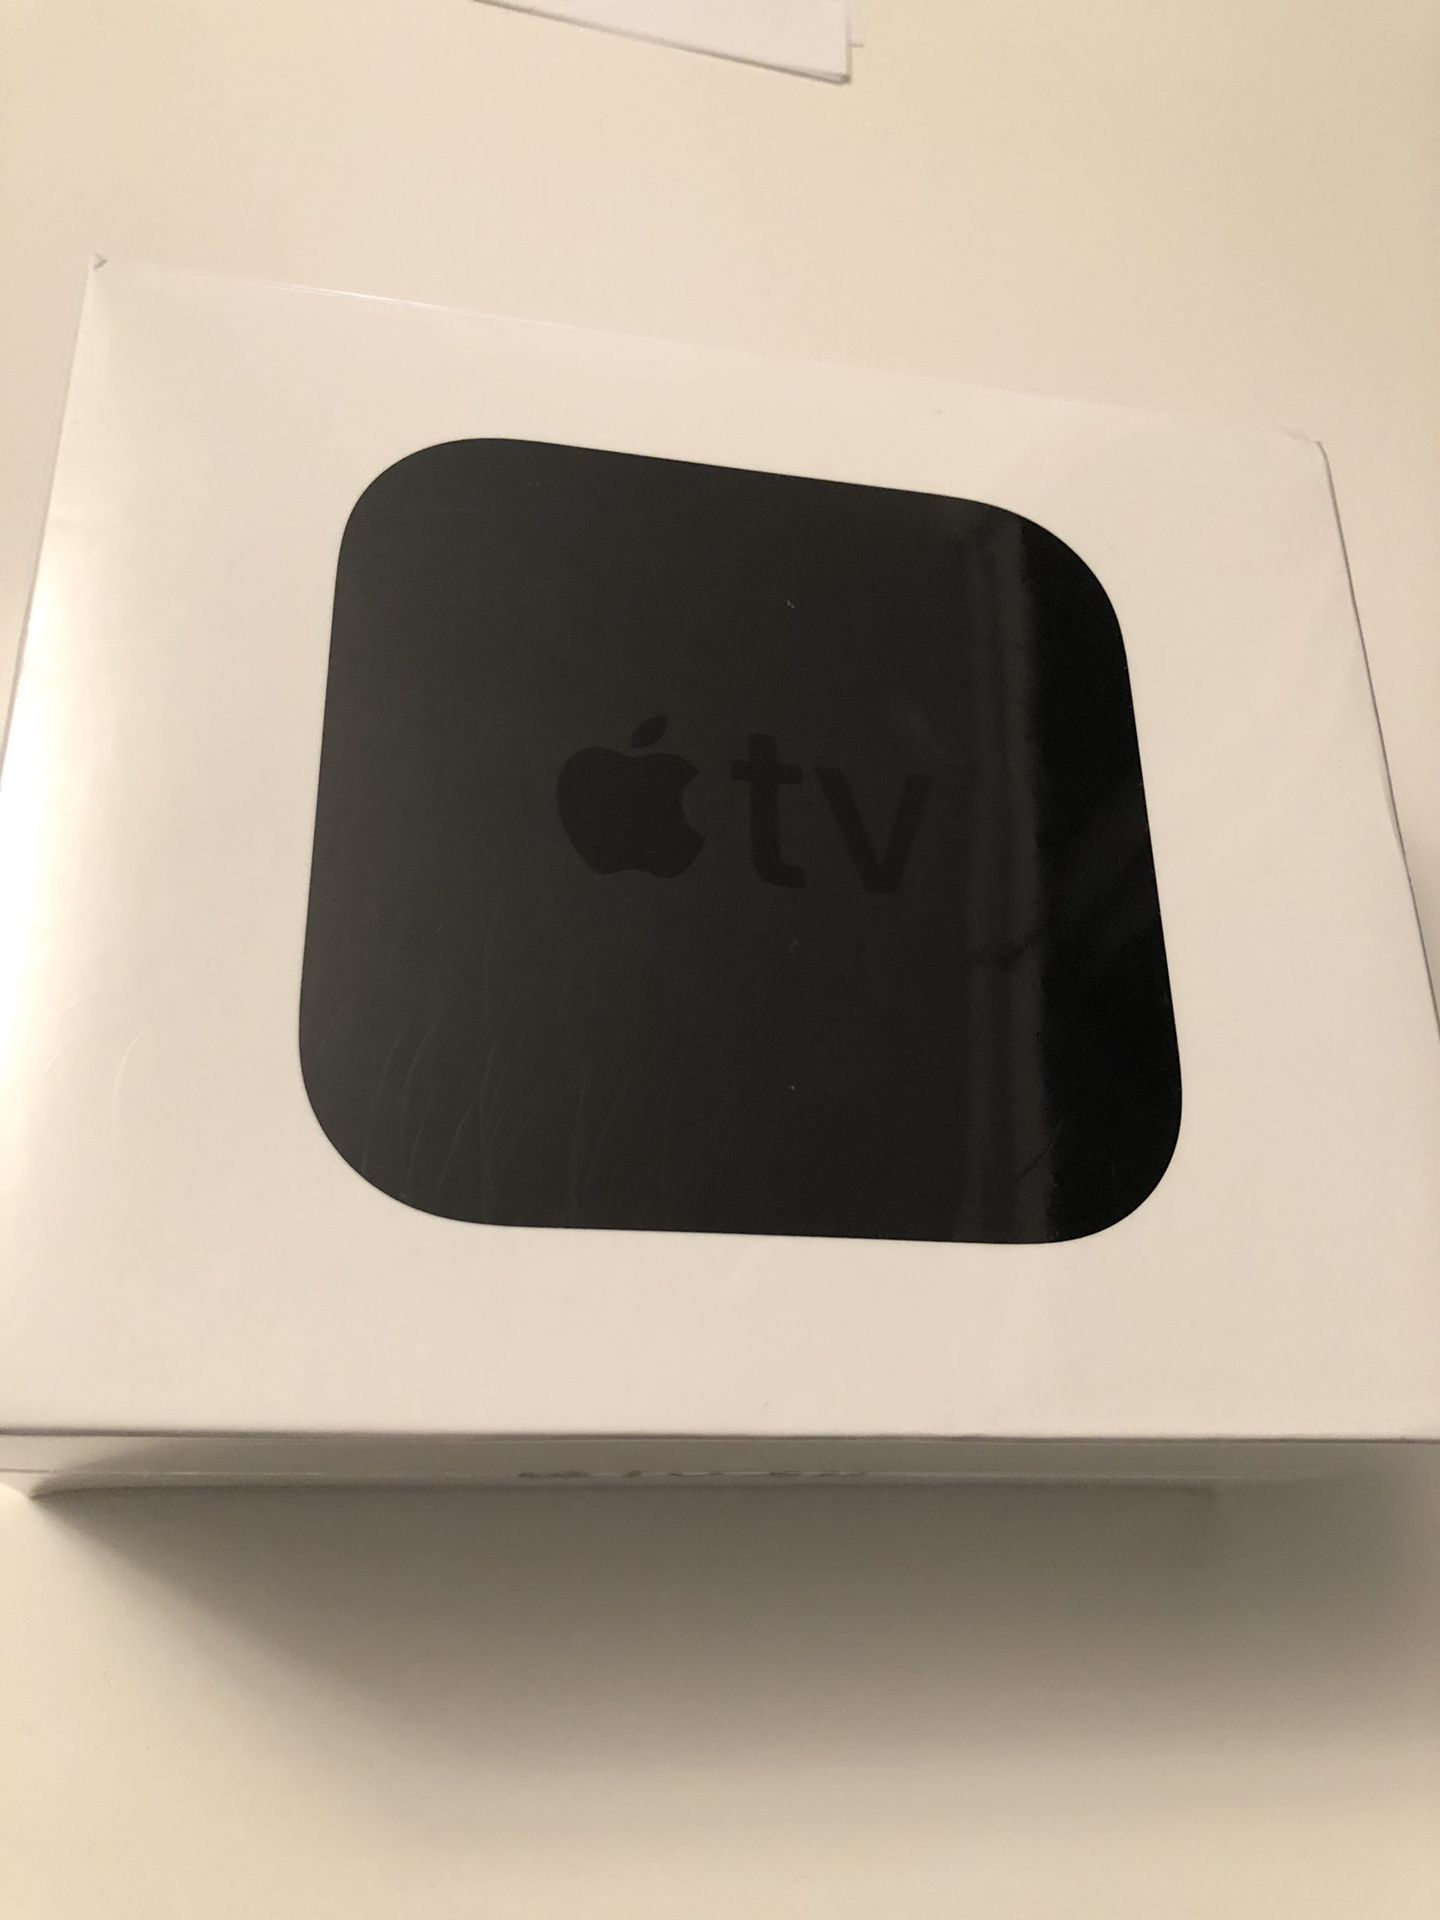 Apple TV 4K 32GB Brand New Sealed Box